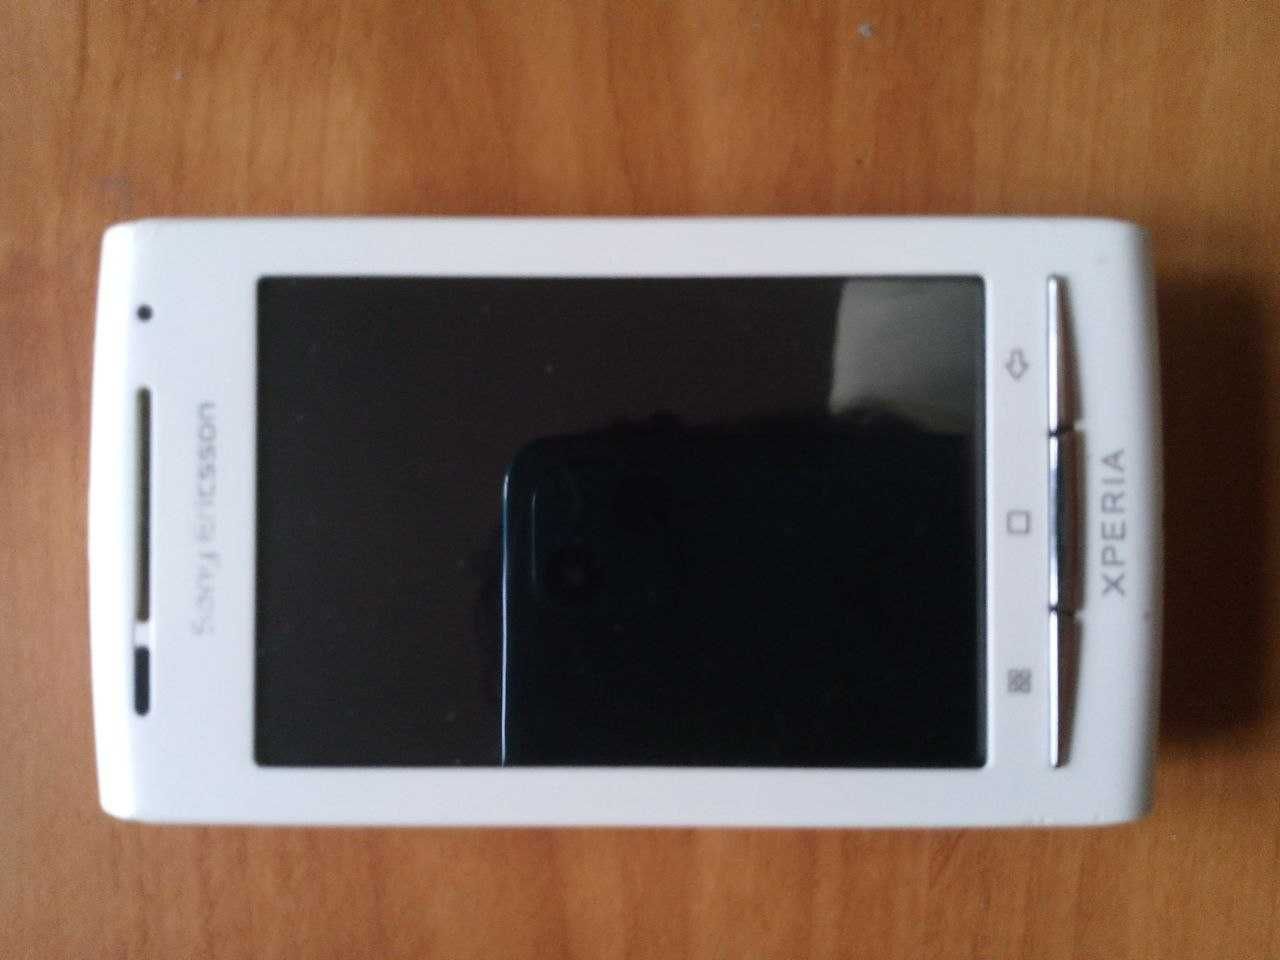 Sony Ericsson Xperia X8 маленький раритетный смартфон 2010 года